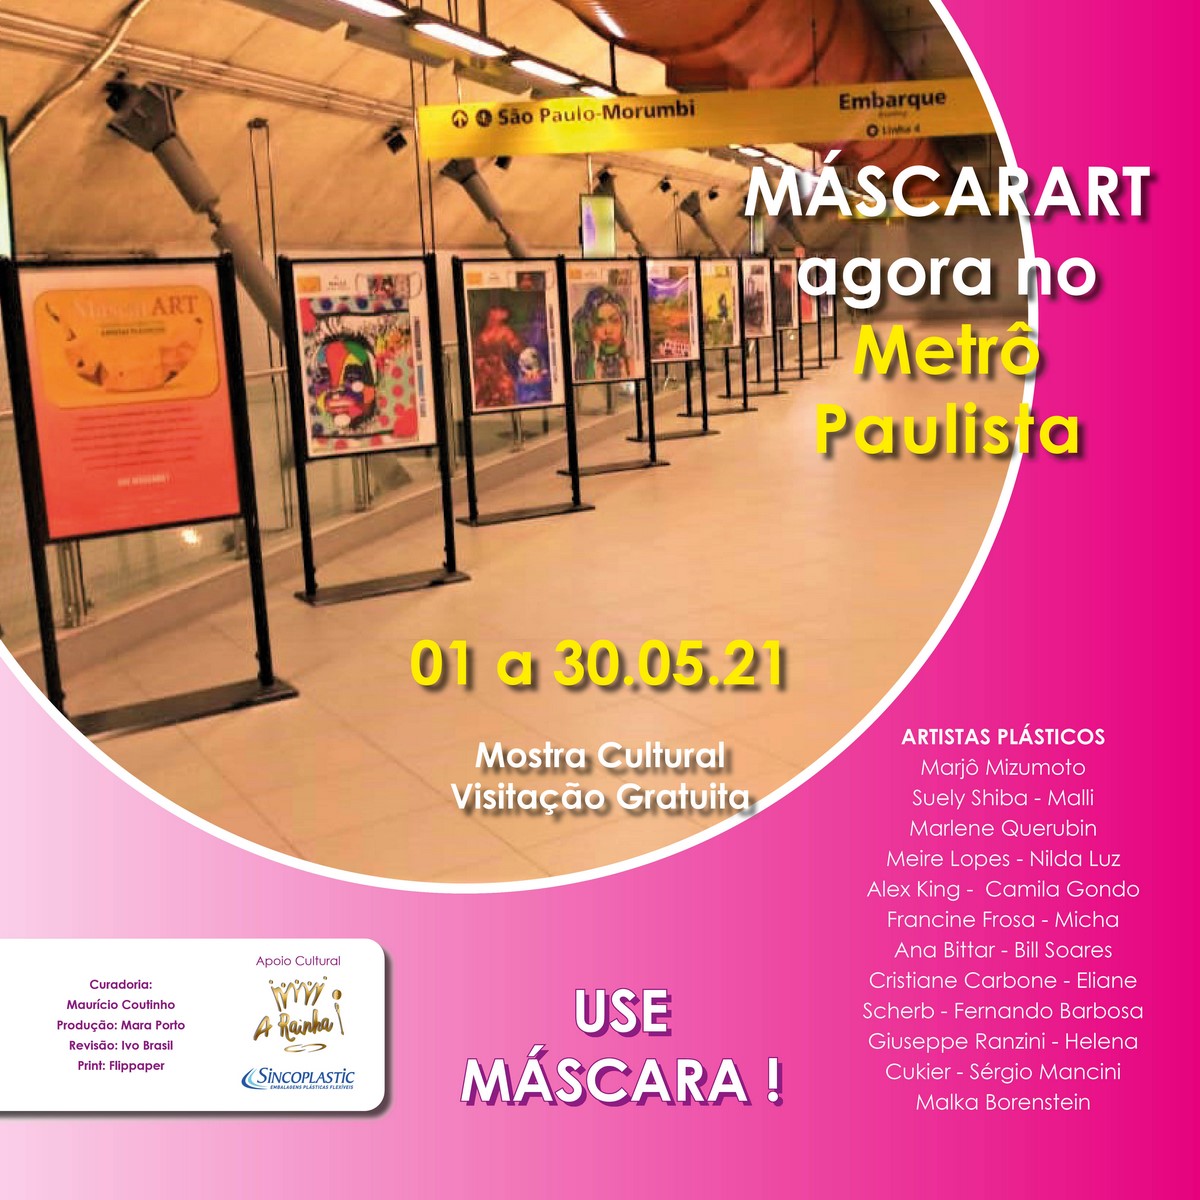 Exhibition "MascarART". Disclosure.